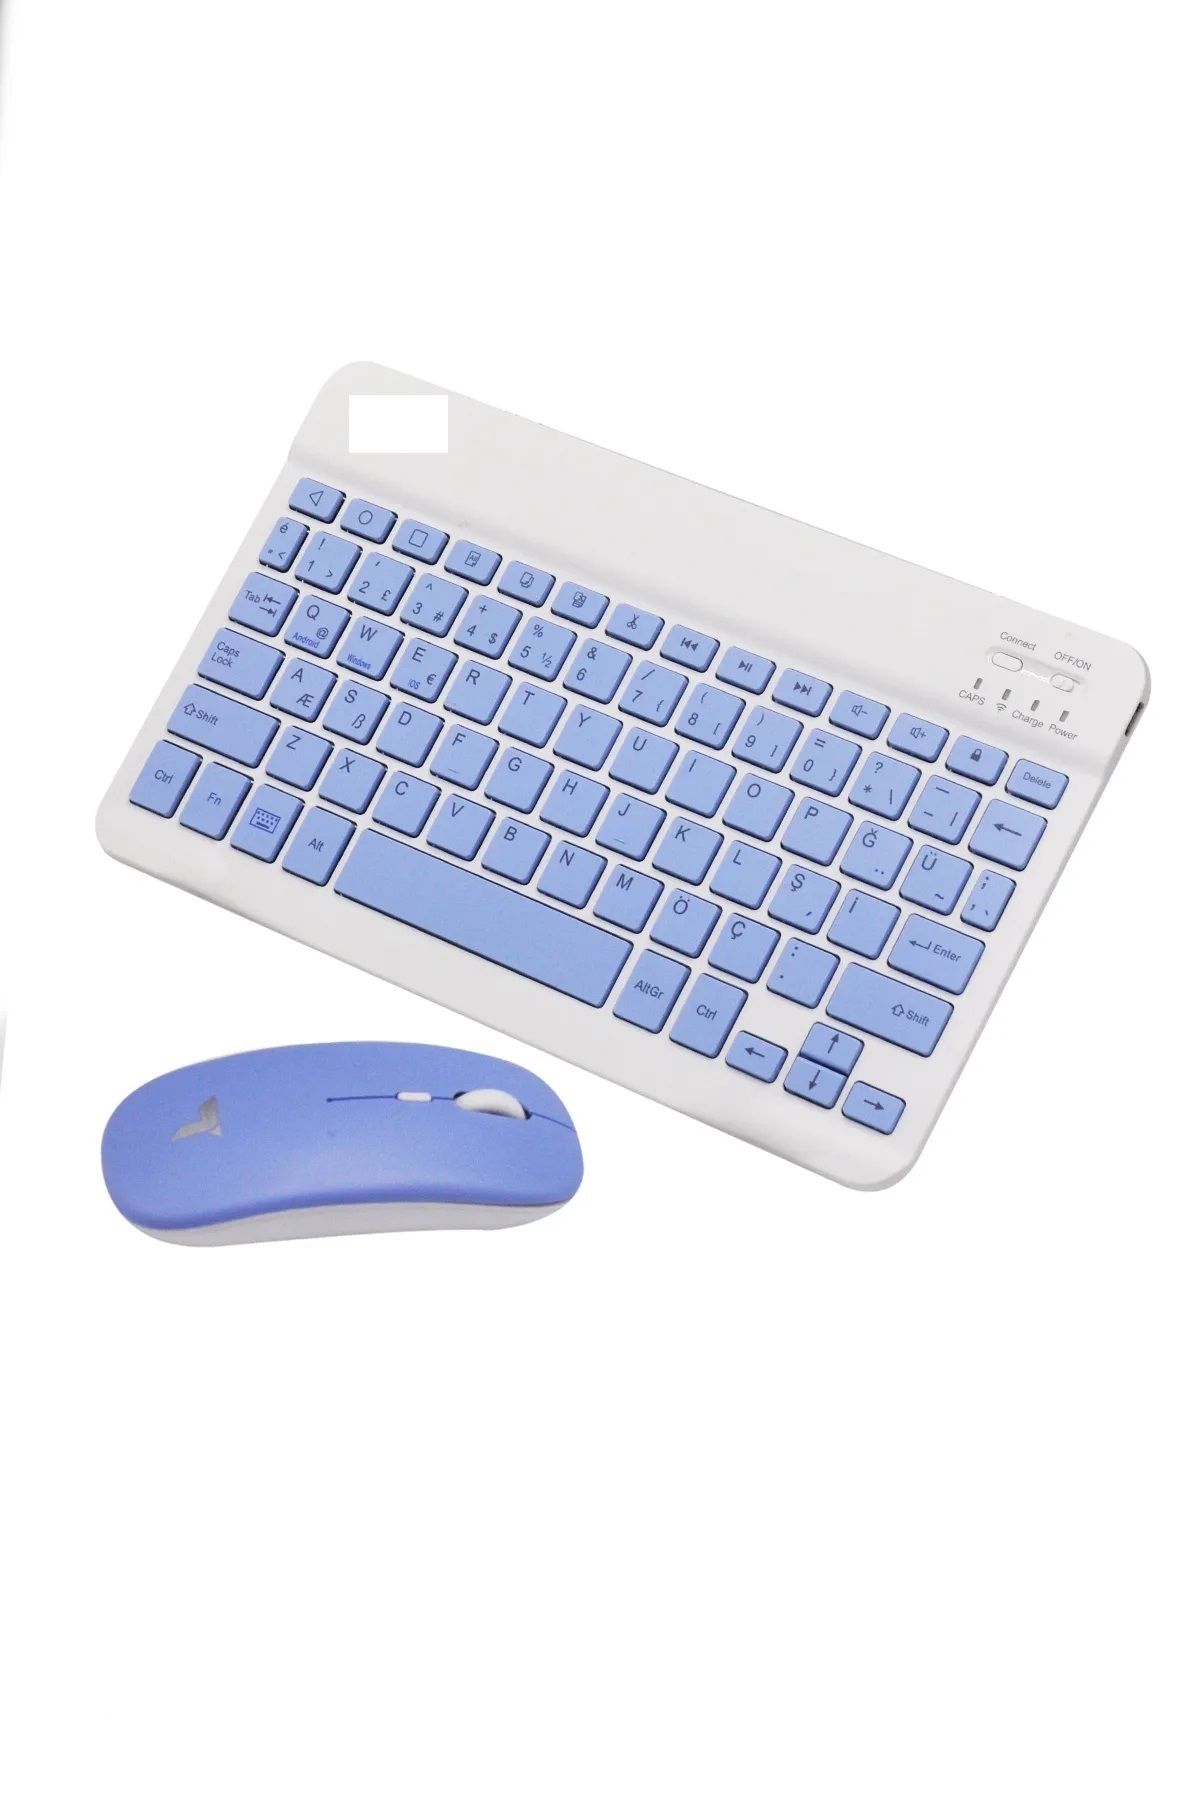 TekizTeknoloji Pembe Tmk-04 Bluetooth Kablosuz Klavye Ve Mouse Seti